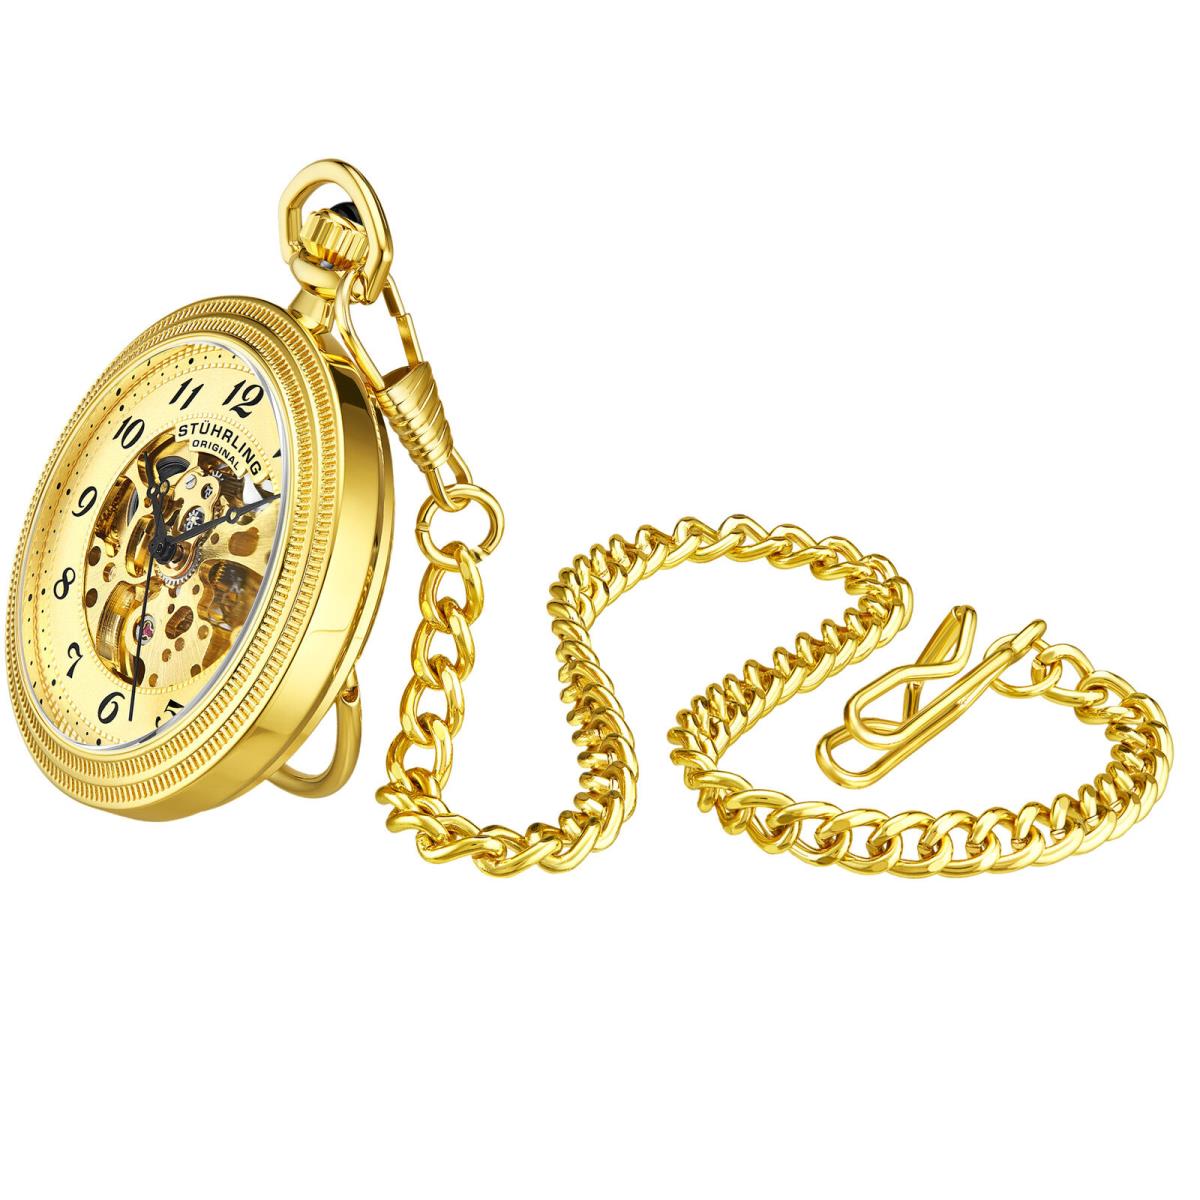 Stuhrling 980 02 Provost Mechanical Skeleton Mens Pocket Watch - Dial: Yellow Gold